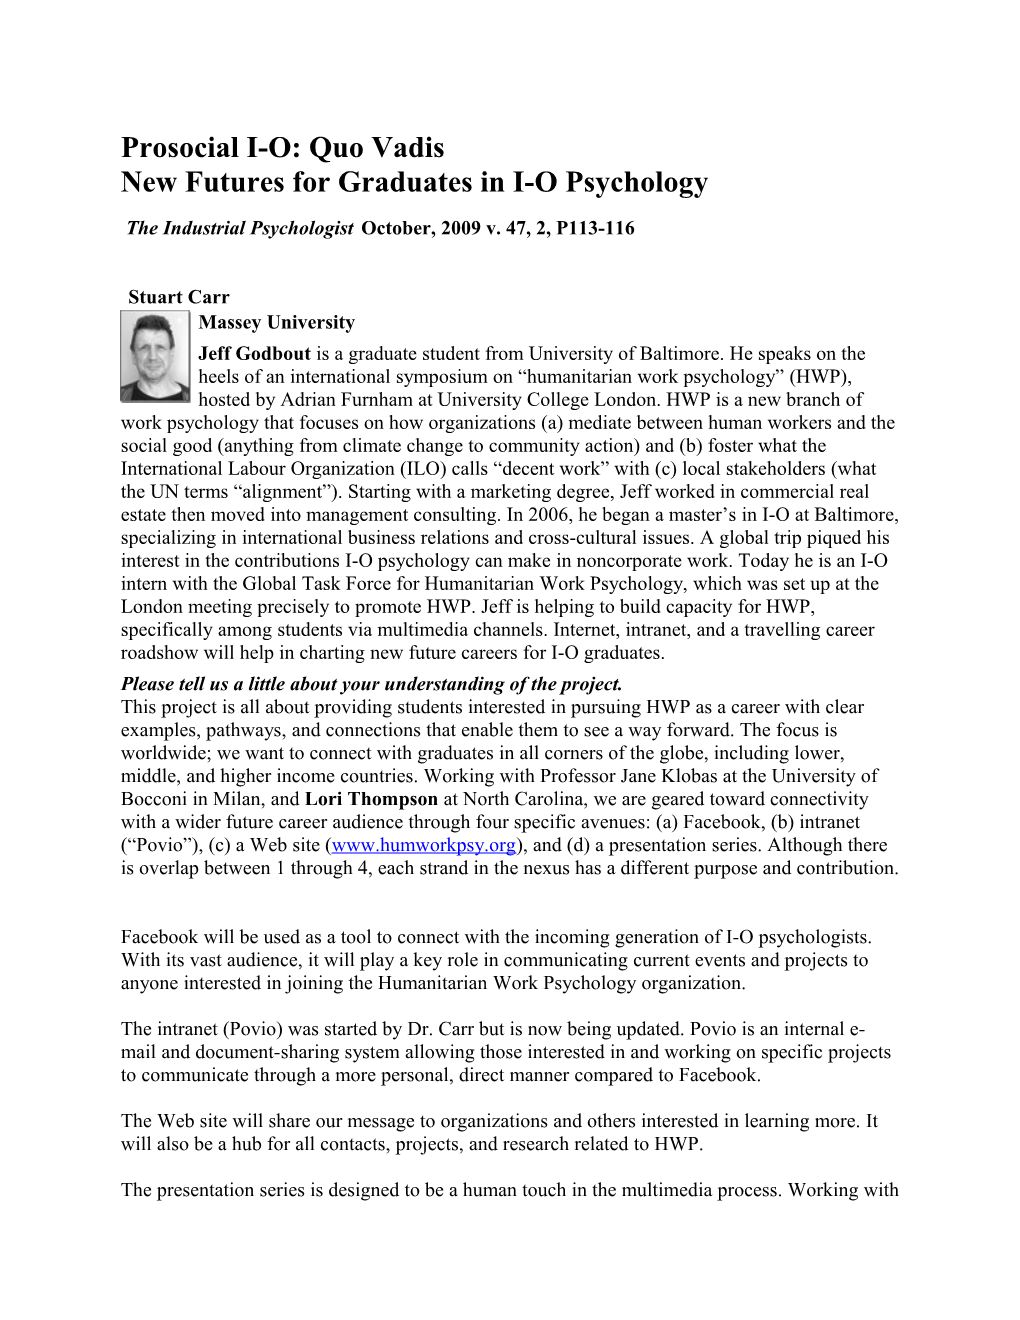 Prosocial I-O: Quo Vadis New Futures for Graduates in I-O Psychology